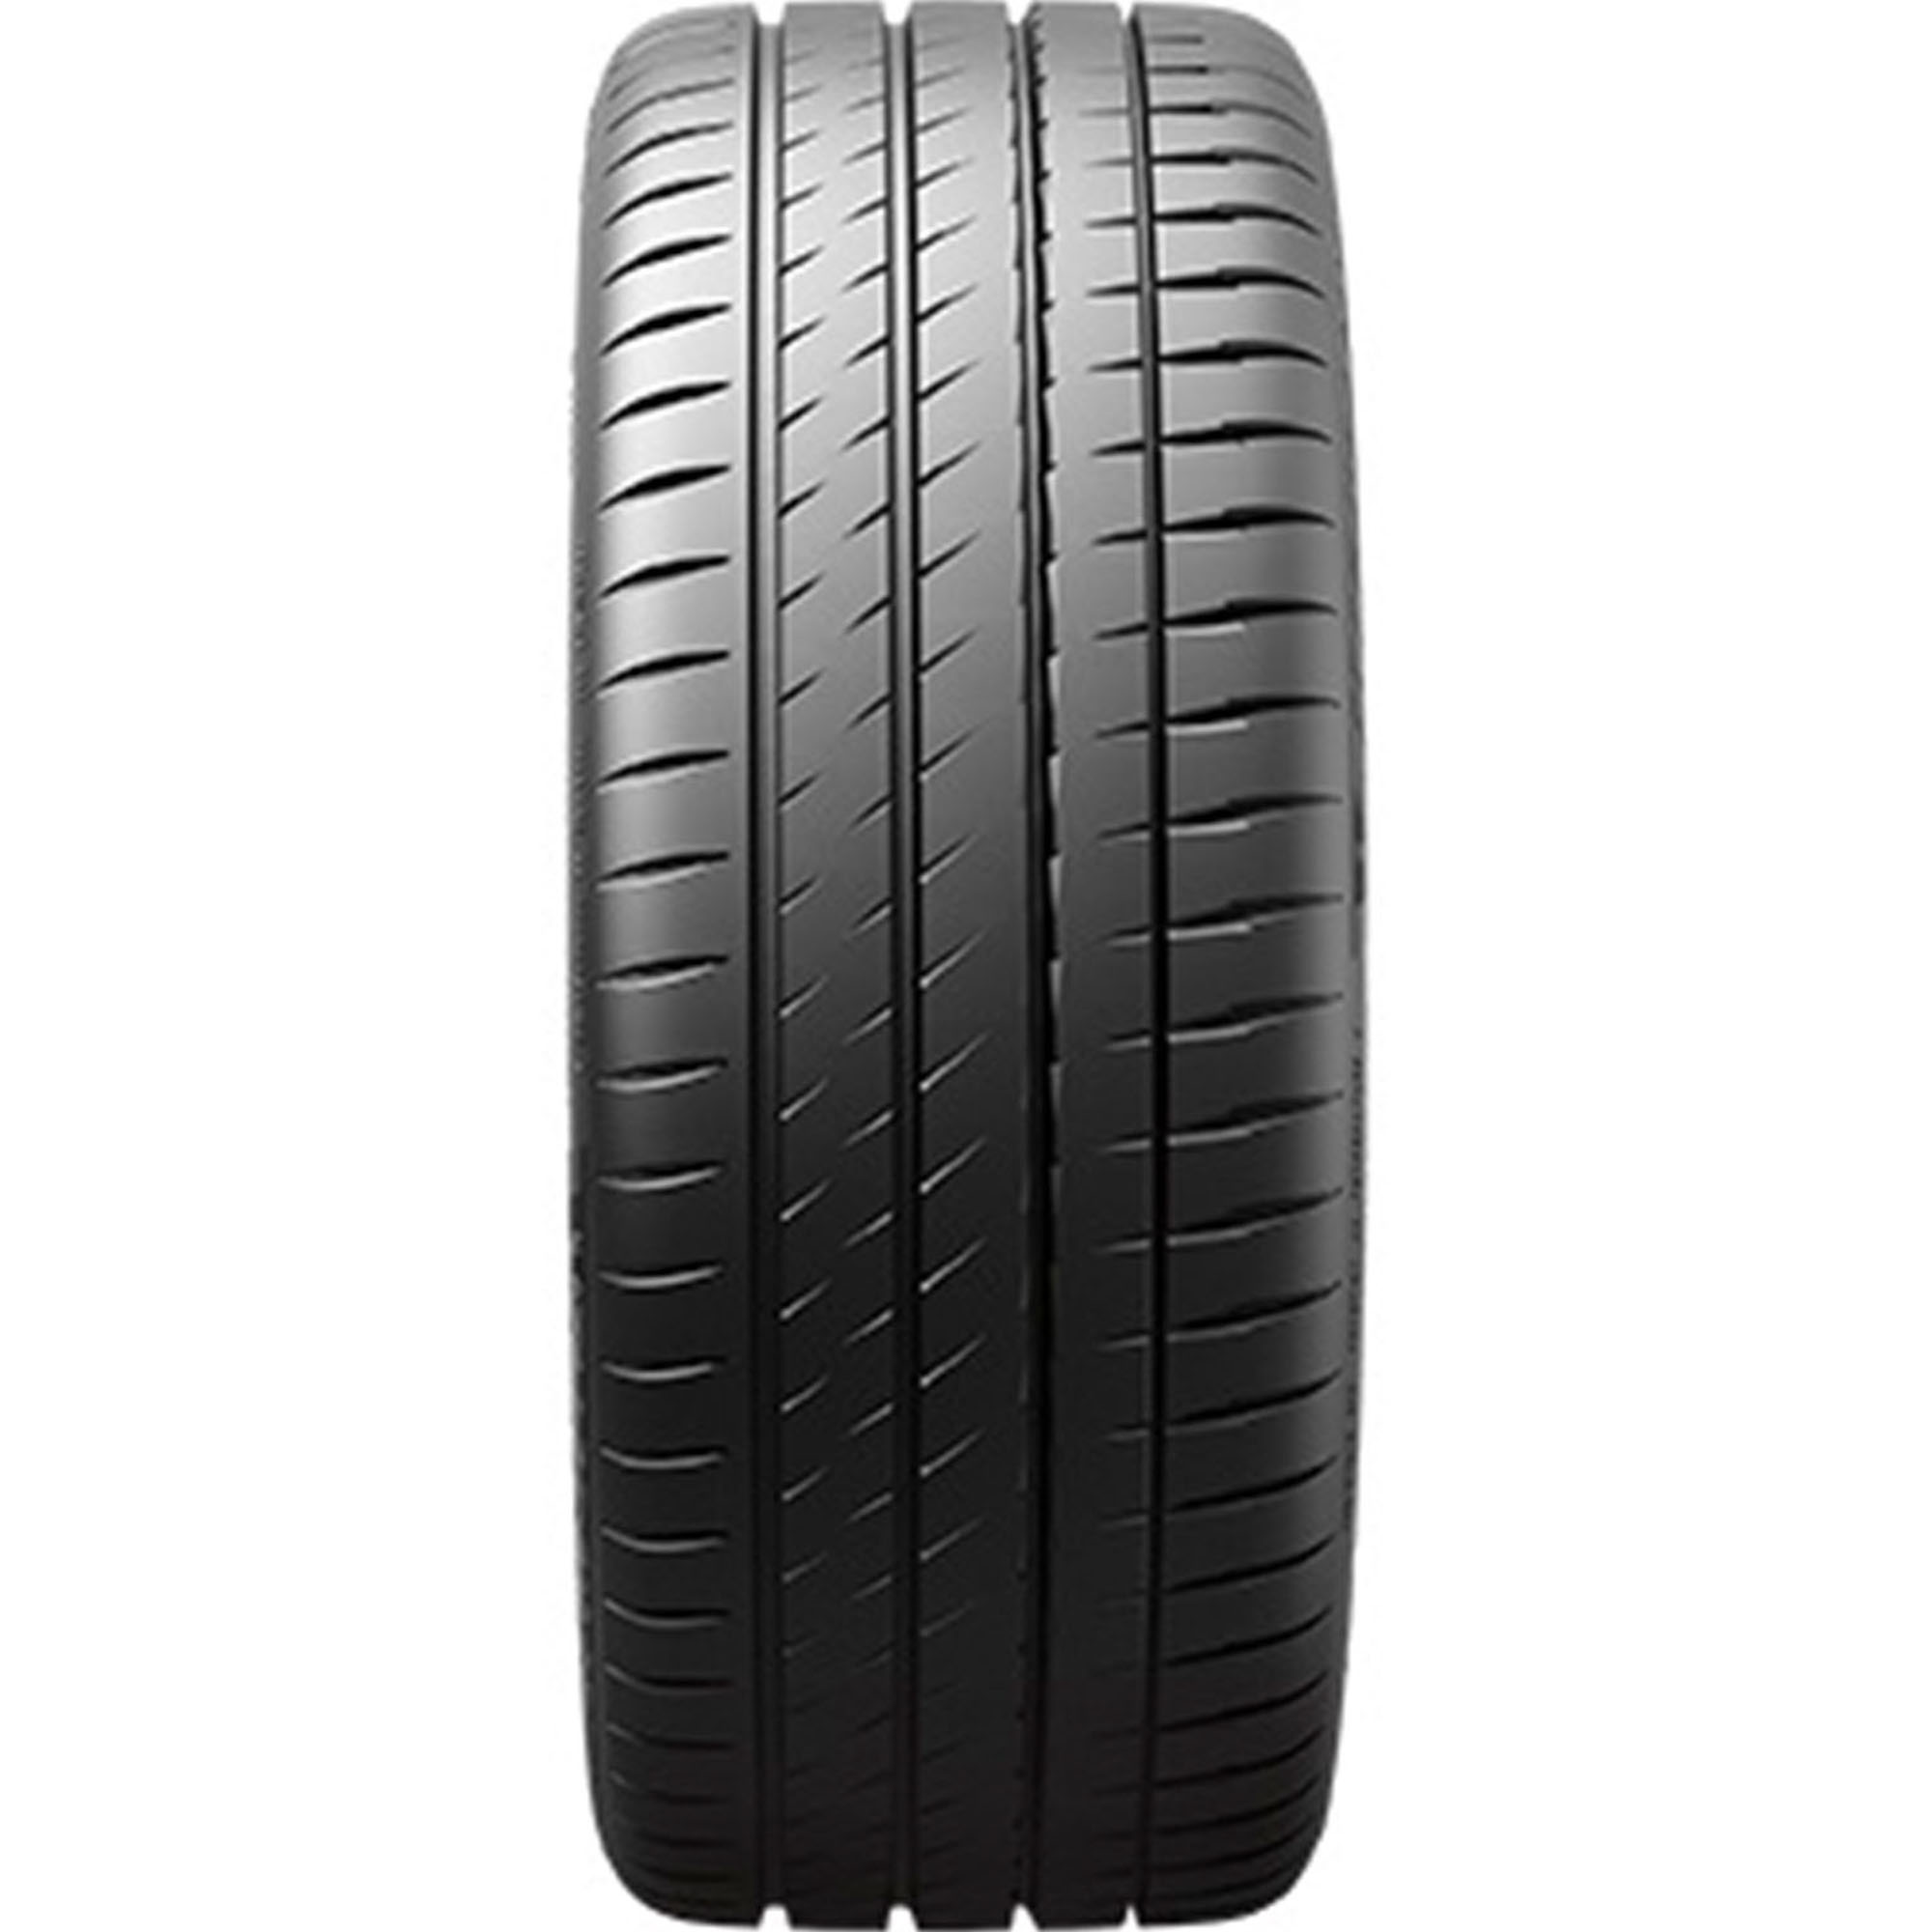 Michelin Pilot Sport 4S Performance 265/35ZR18 (97Y) XL Passenger Tire - image 3 of 4